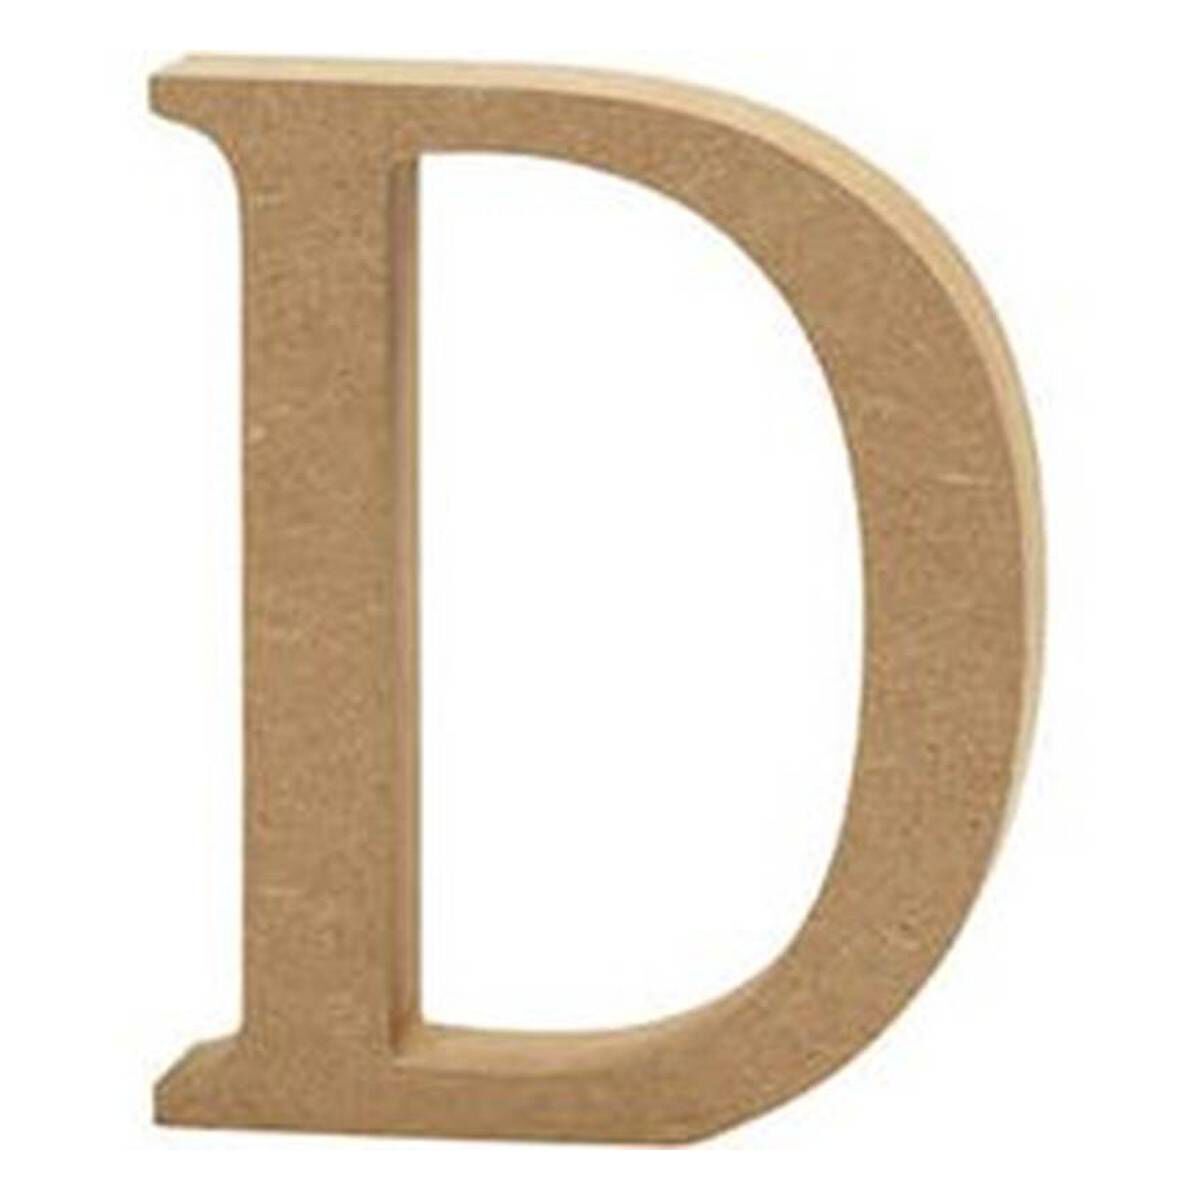 MDF Wooden Letter D 13cm | Hobbycraft